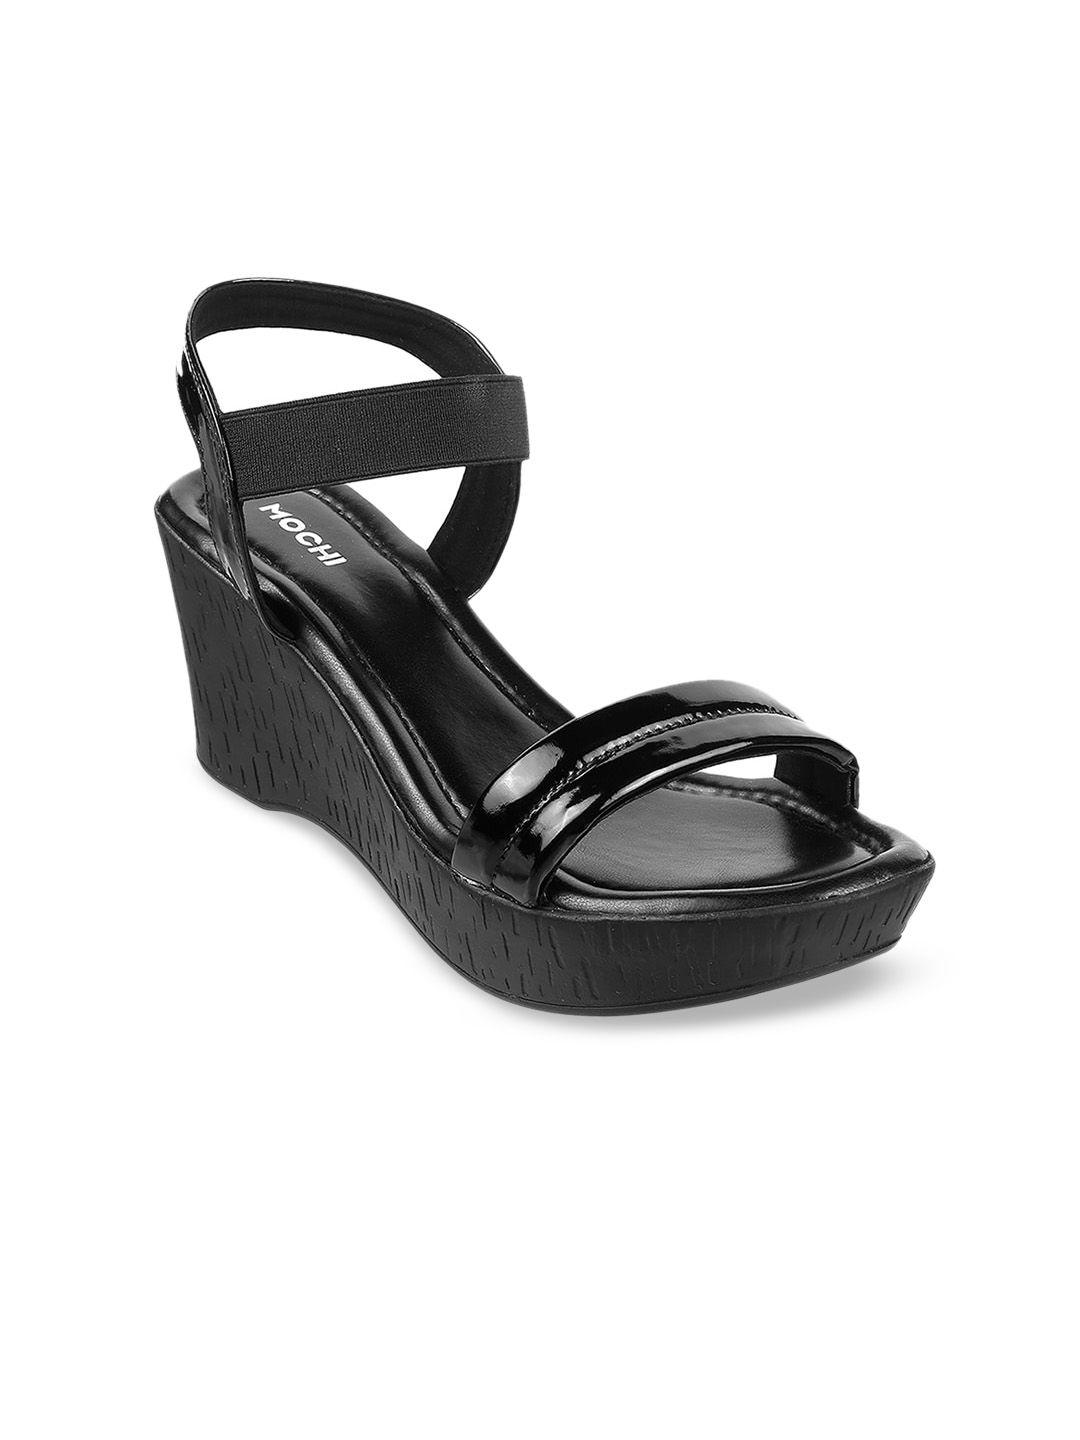 mochi-black-wedge-heels